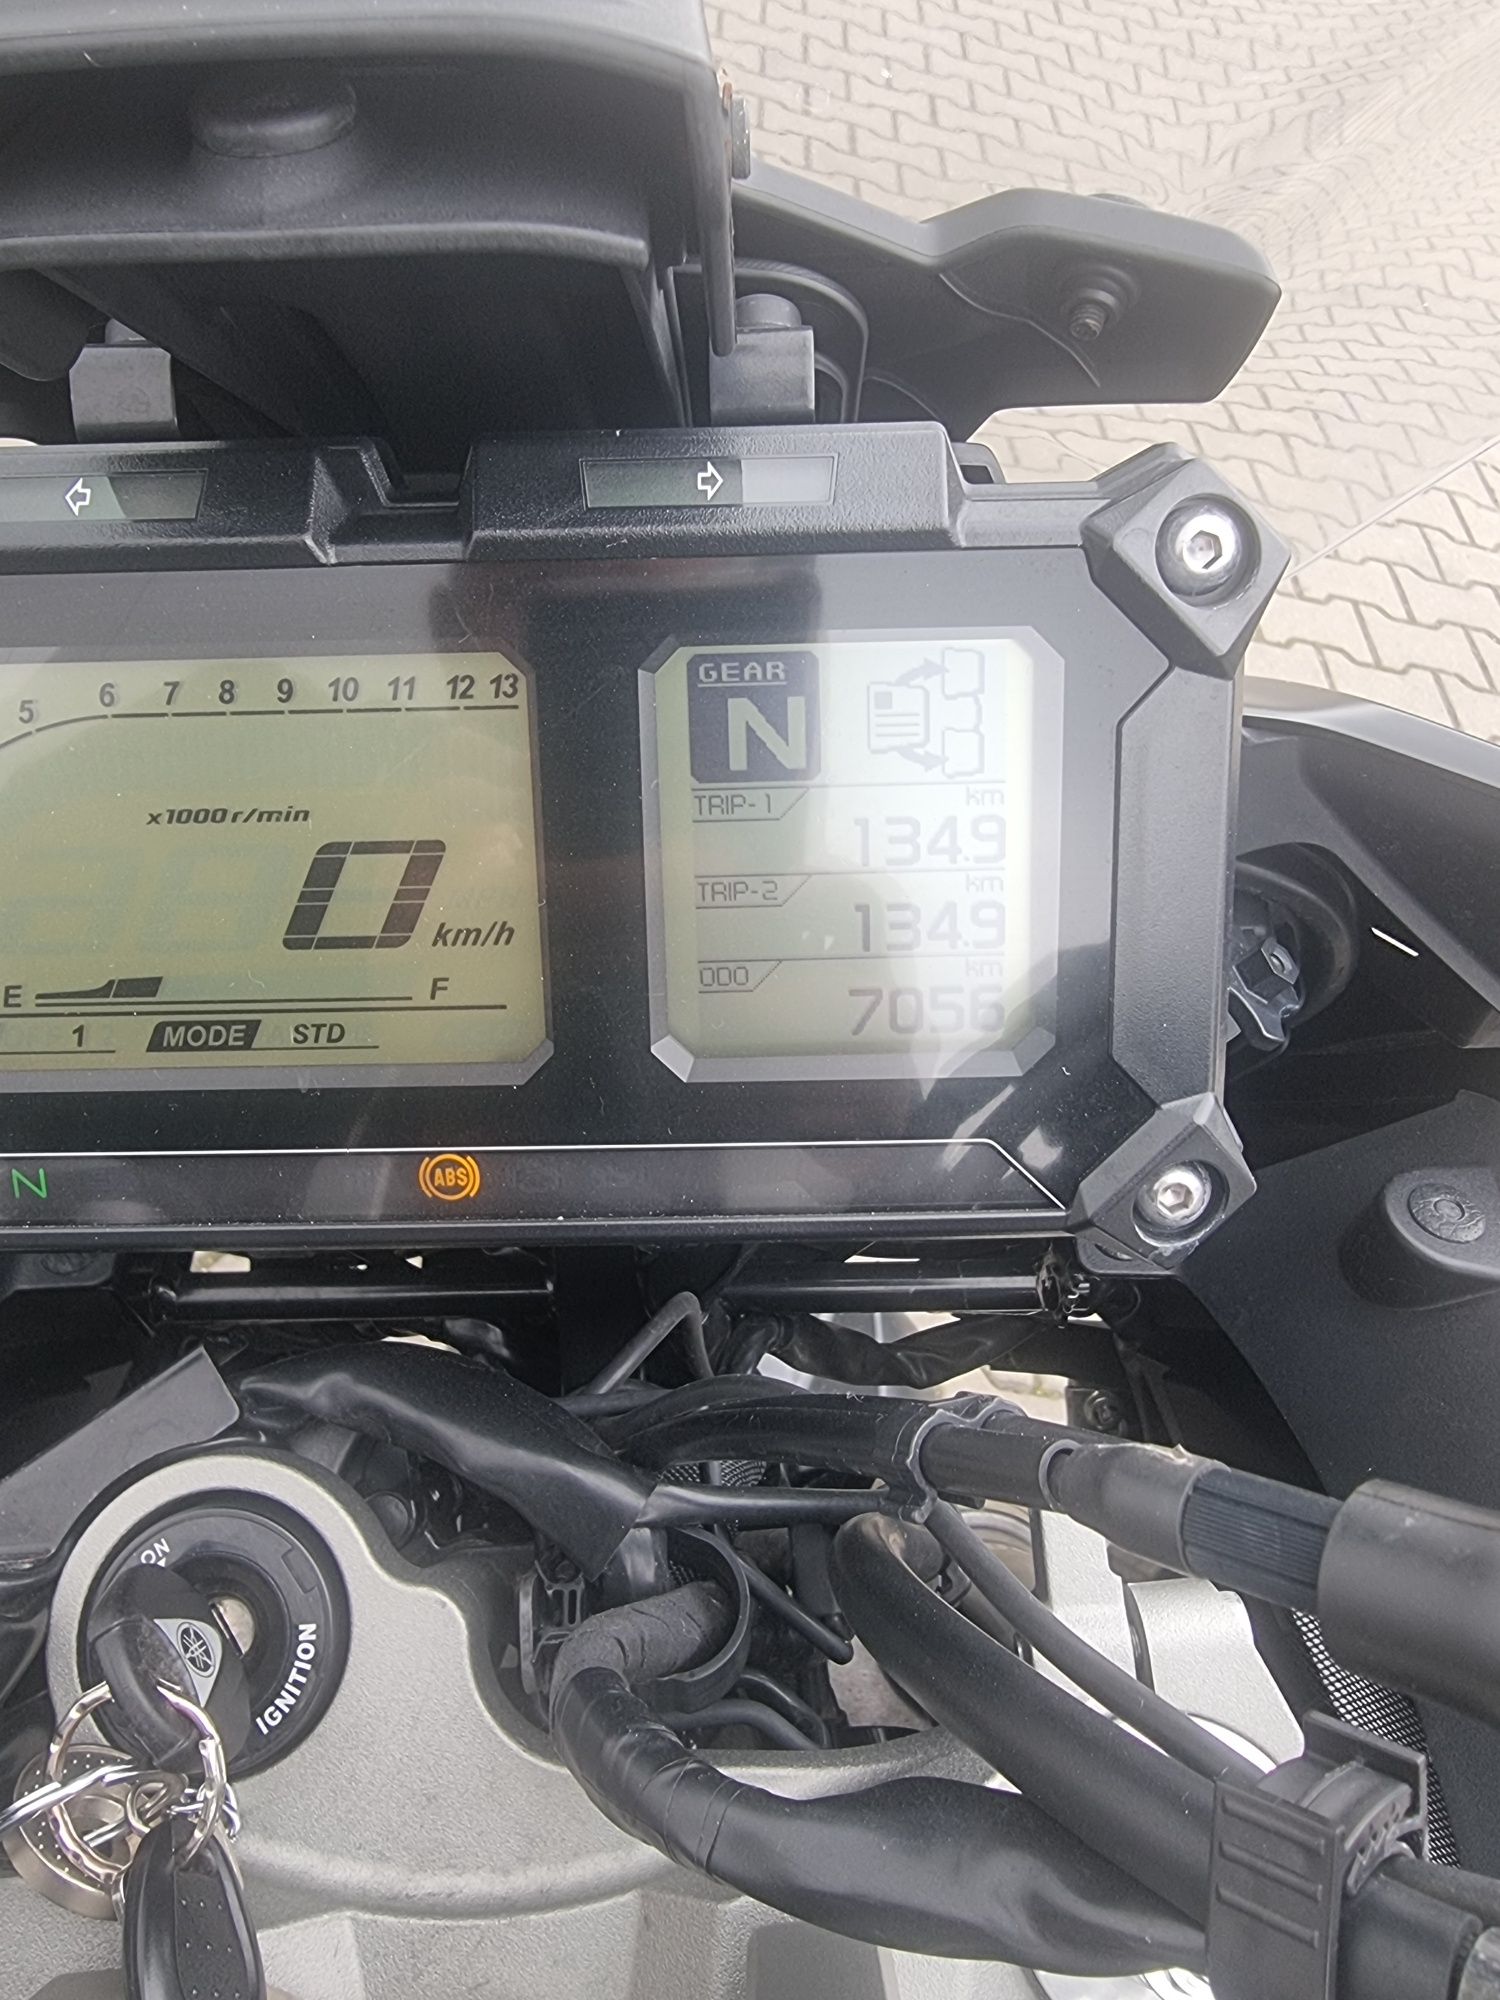 Motocicleta Yamah Tracer 900 MT 09 7000 km reali